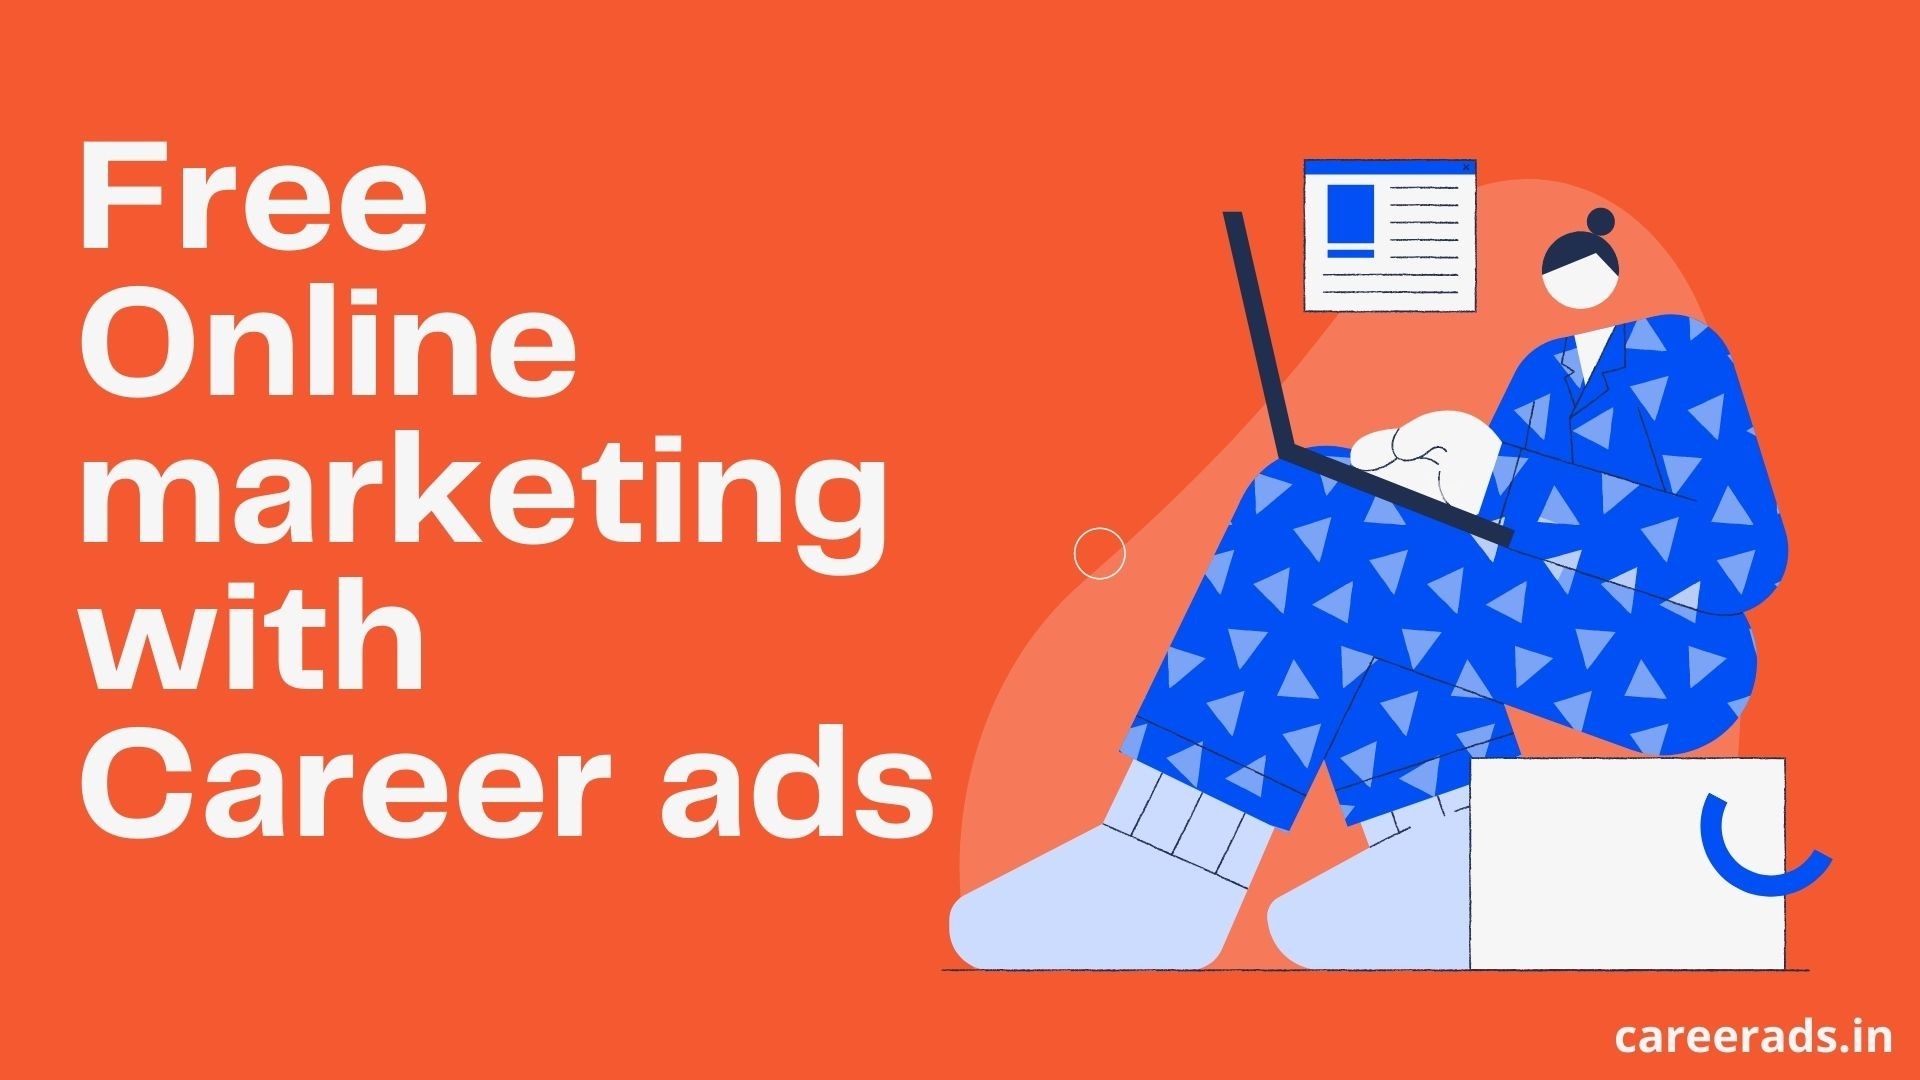 Career ads makes marketing easy